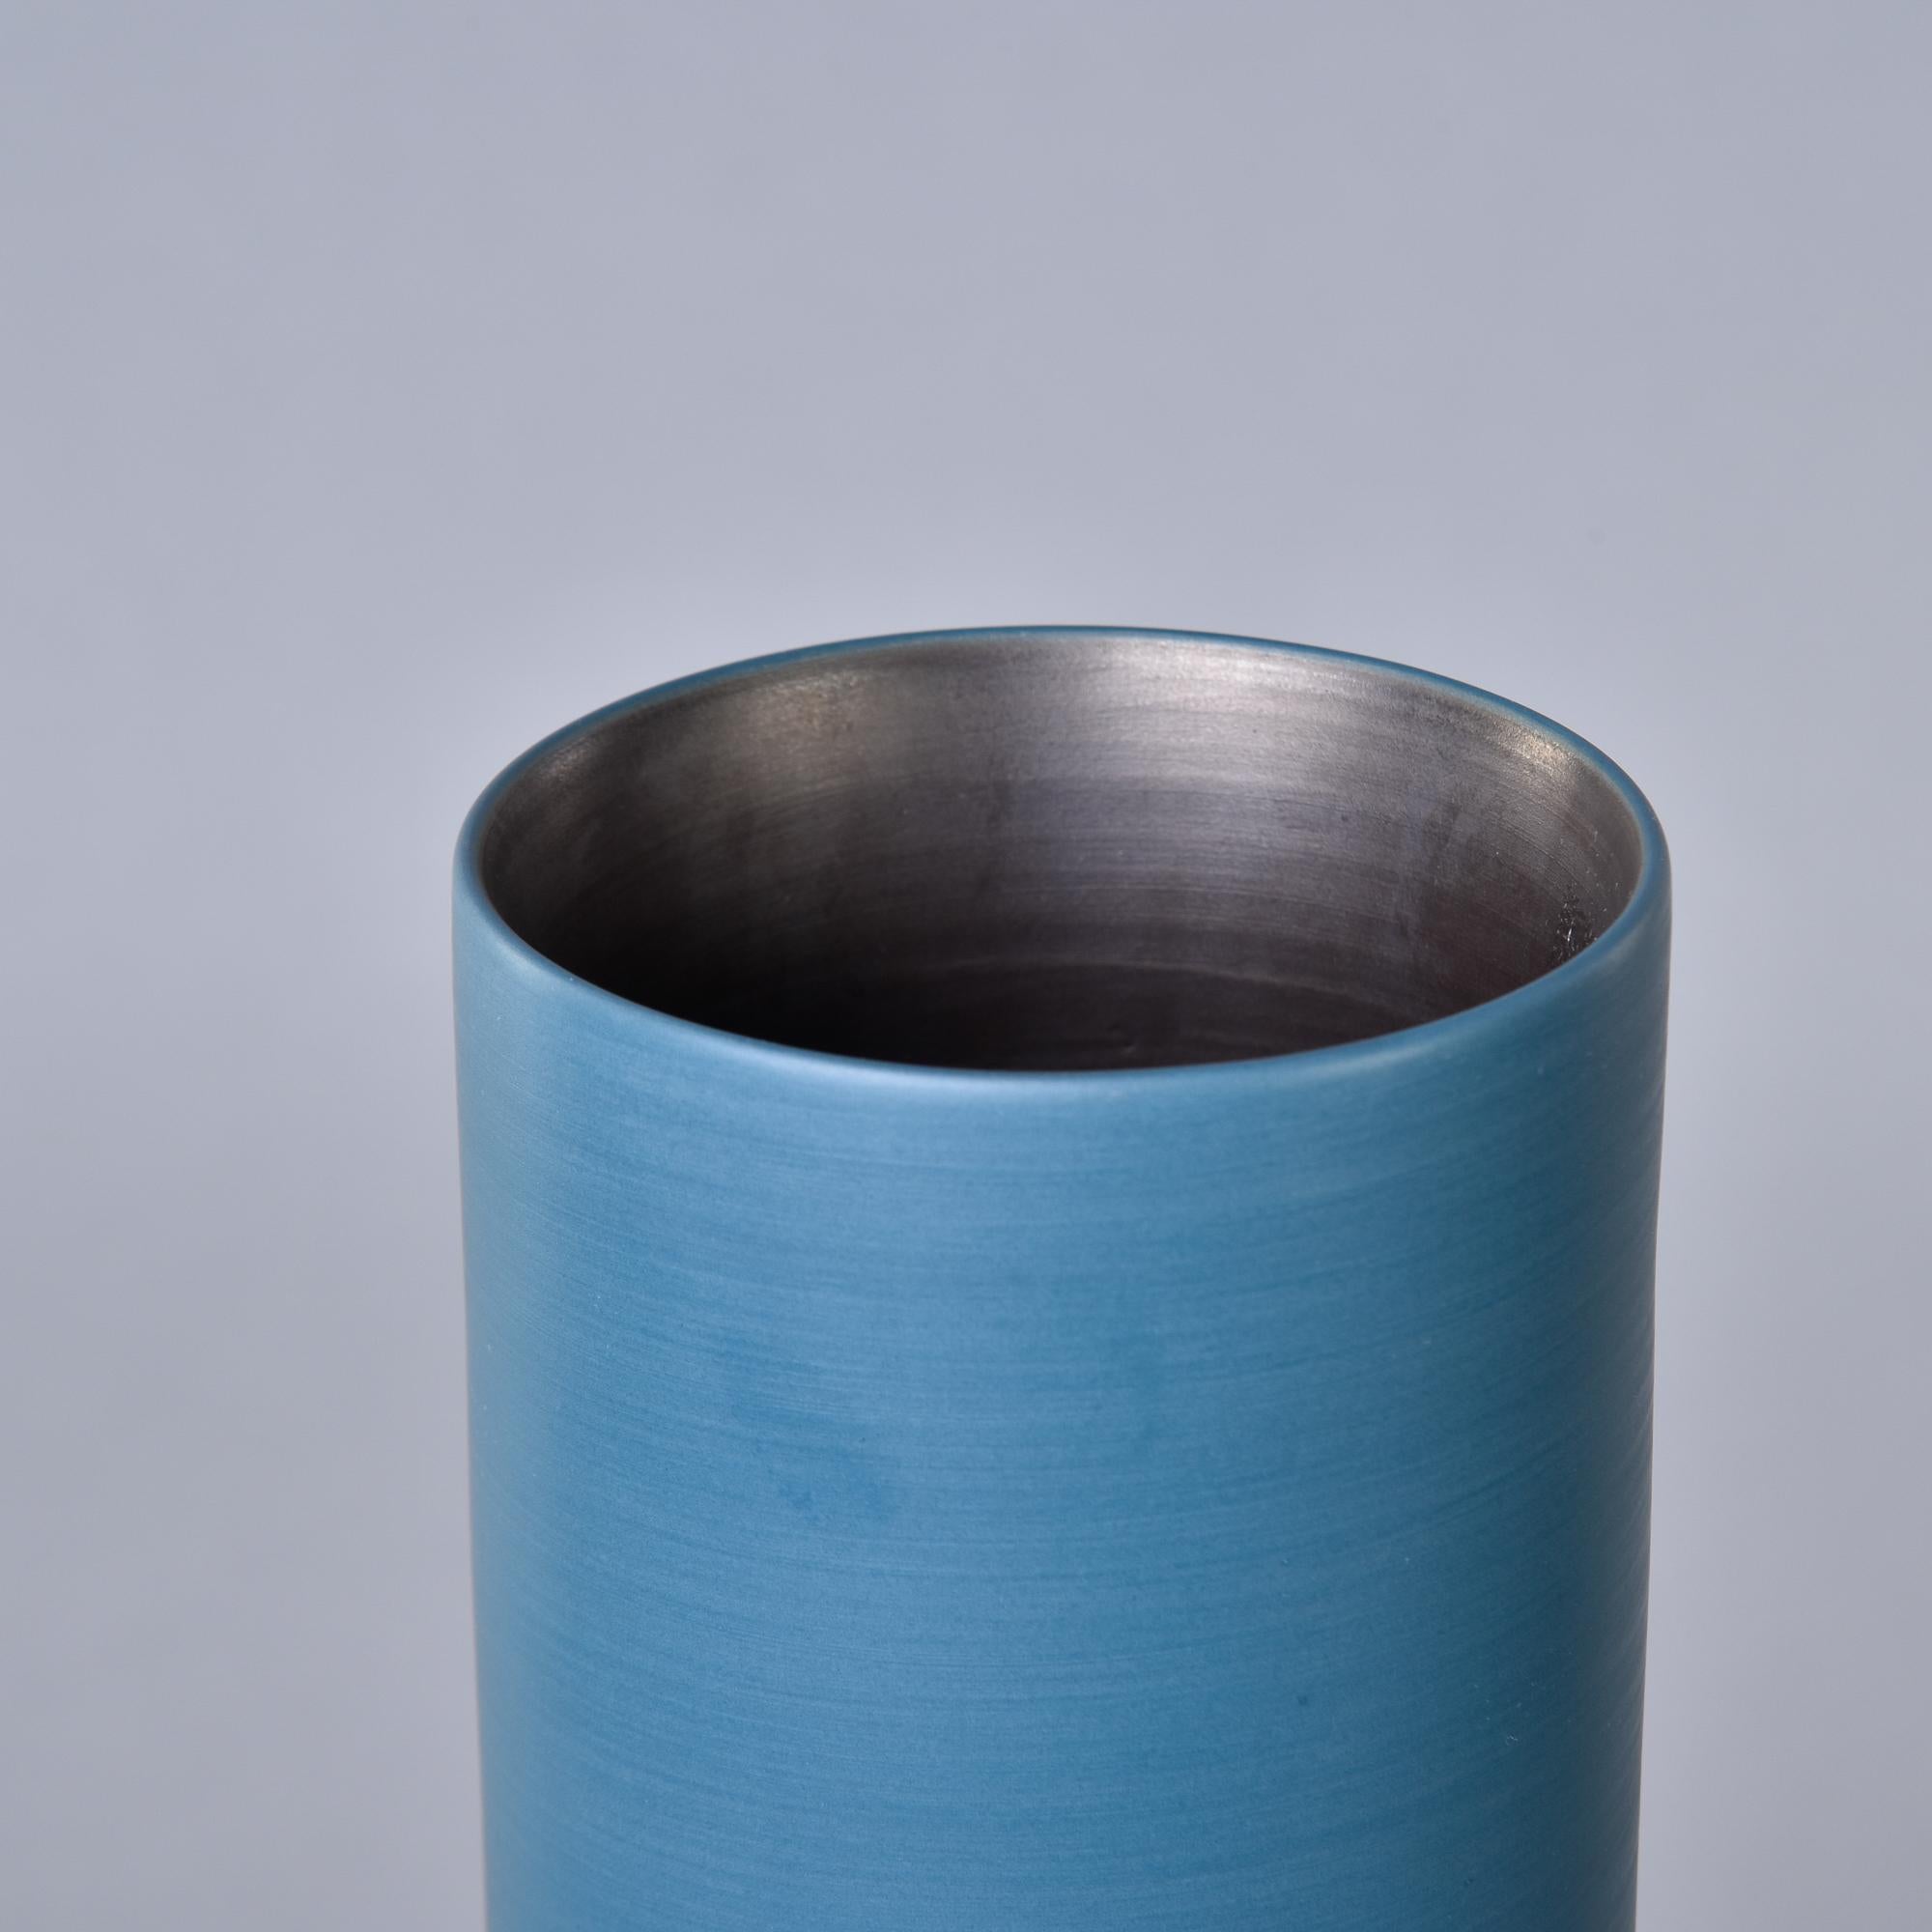 Italian New Rina Menardi Canna 2 Vase in Teal Blue For Sale